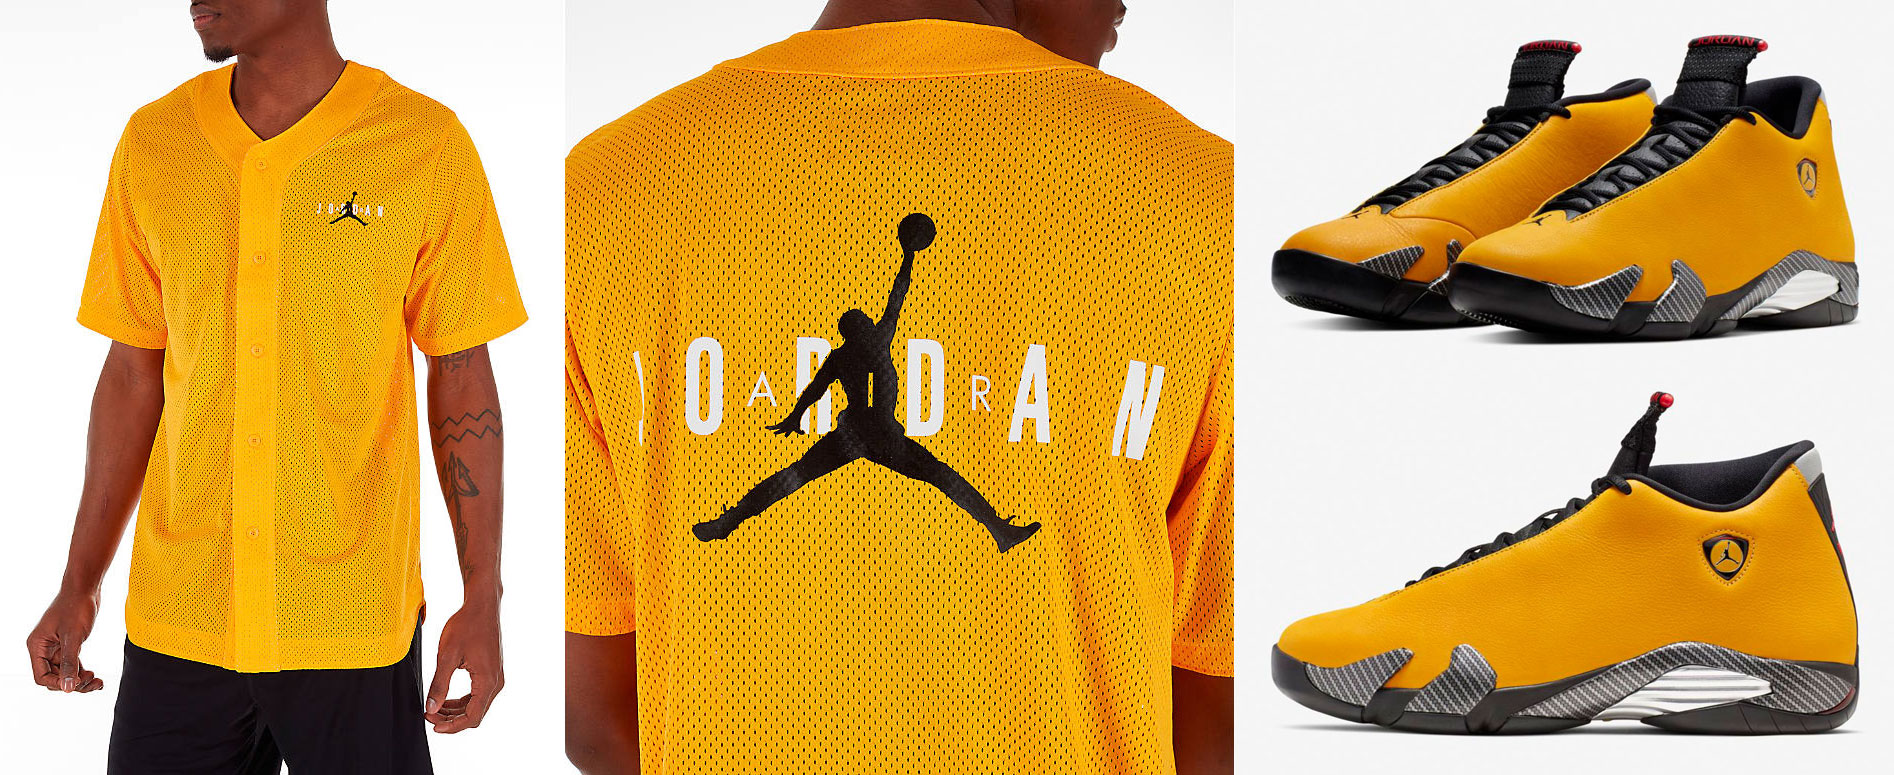 jordan-14-yellow-ferrari-mesh-jersey-shirt